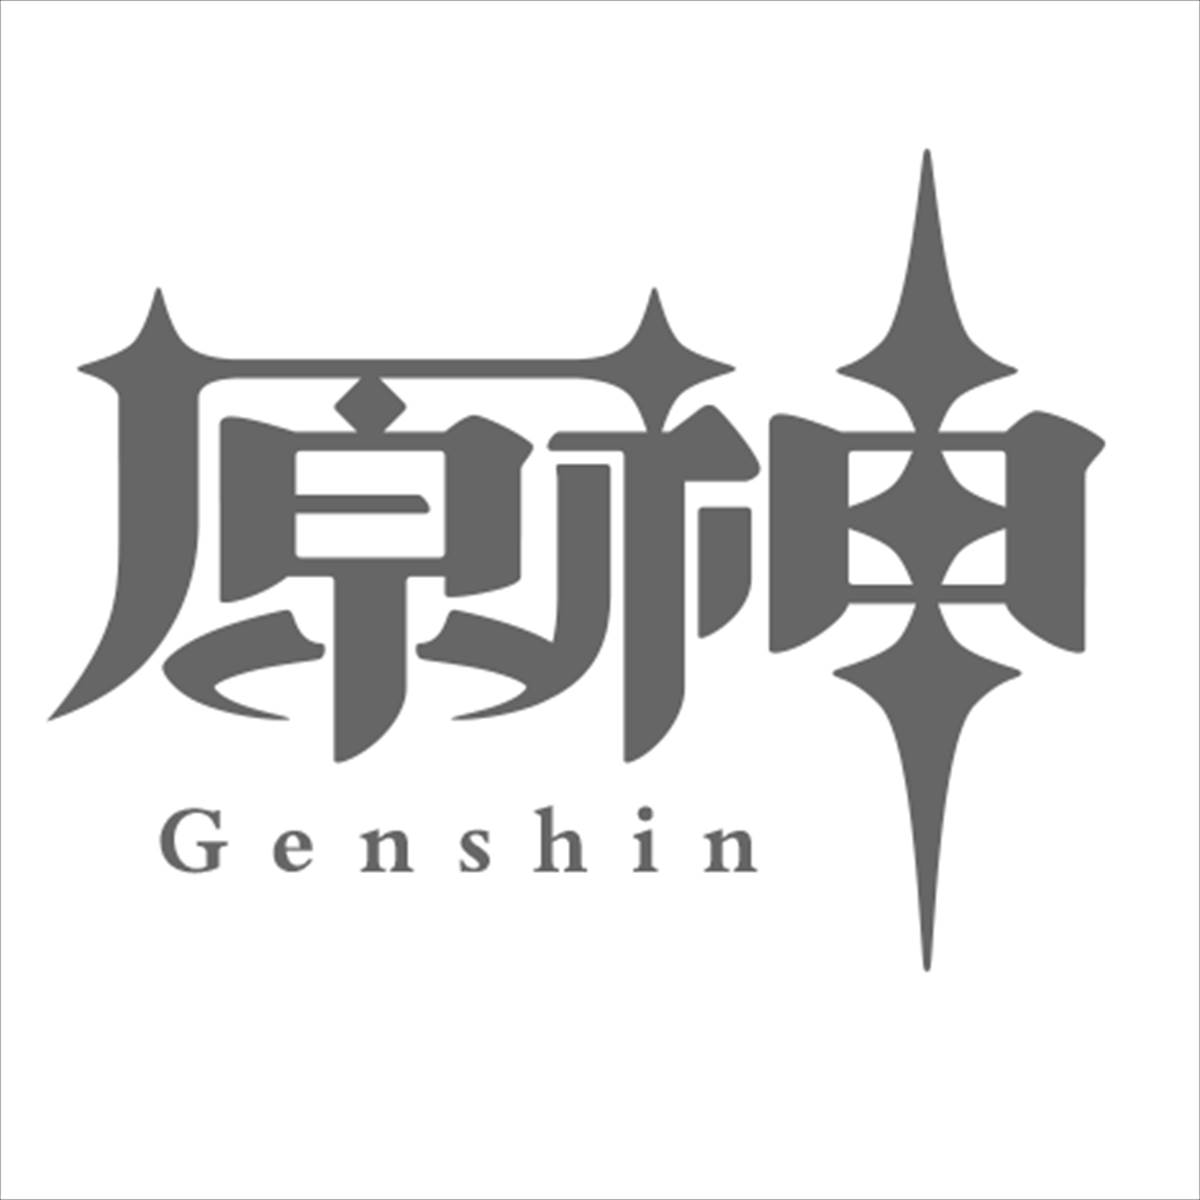 Китайский импакт. Геншин логотип. Геншин Импакт эмблема. Genshin надпись. Genshin Impact логотип на прозрачном фоне.